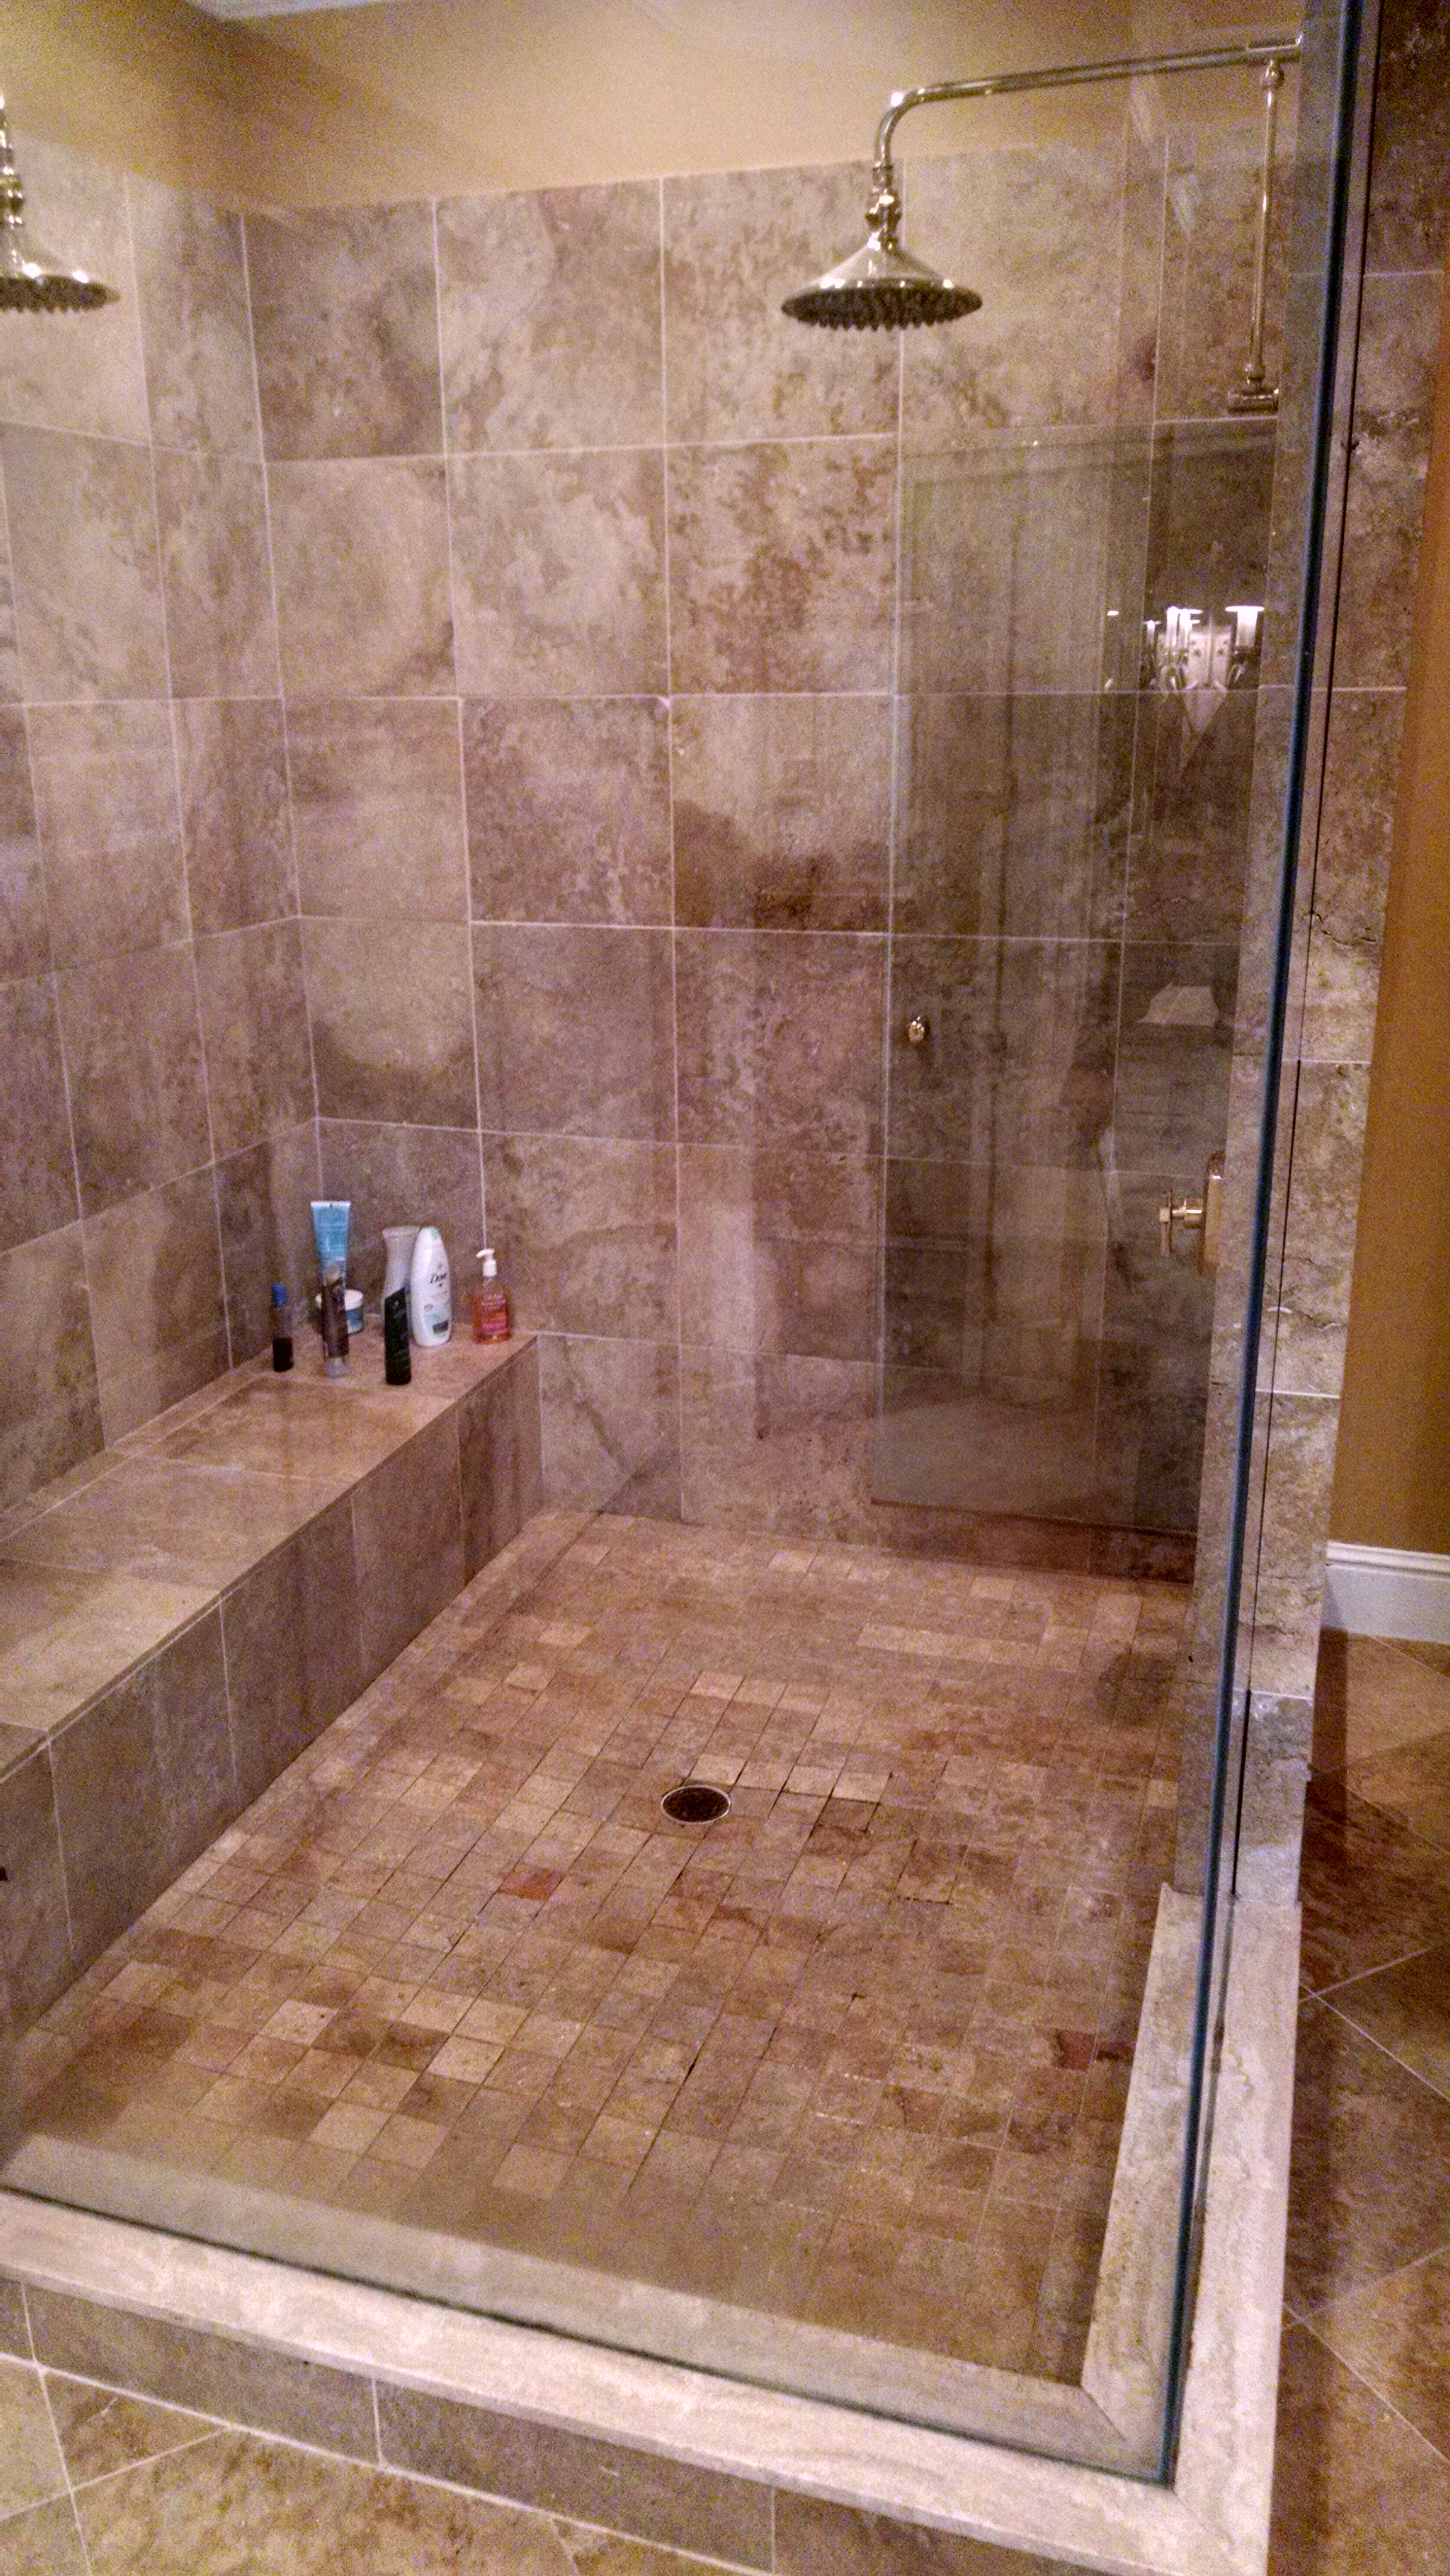 Travertine Tile & Grout Restoration in Master Bathroom Shower